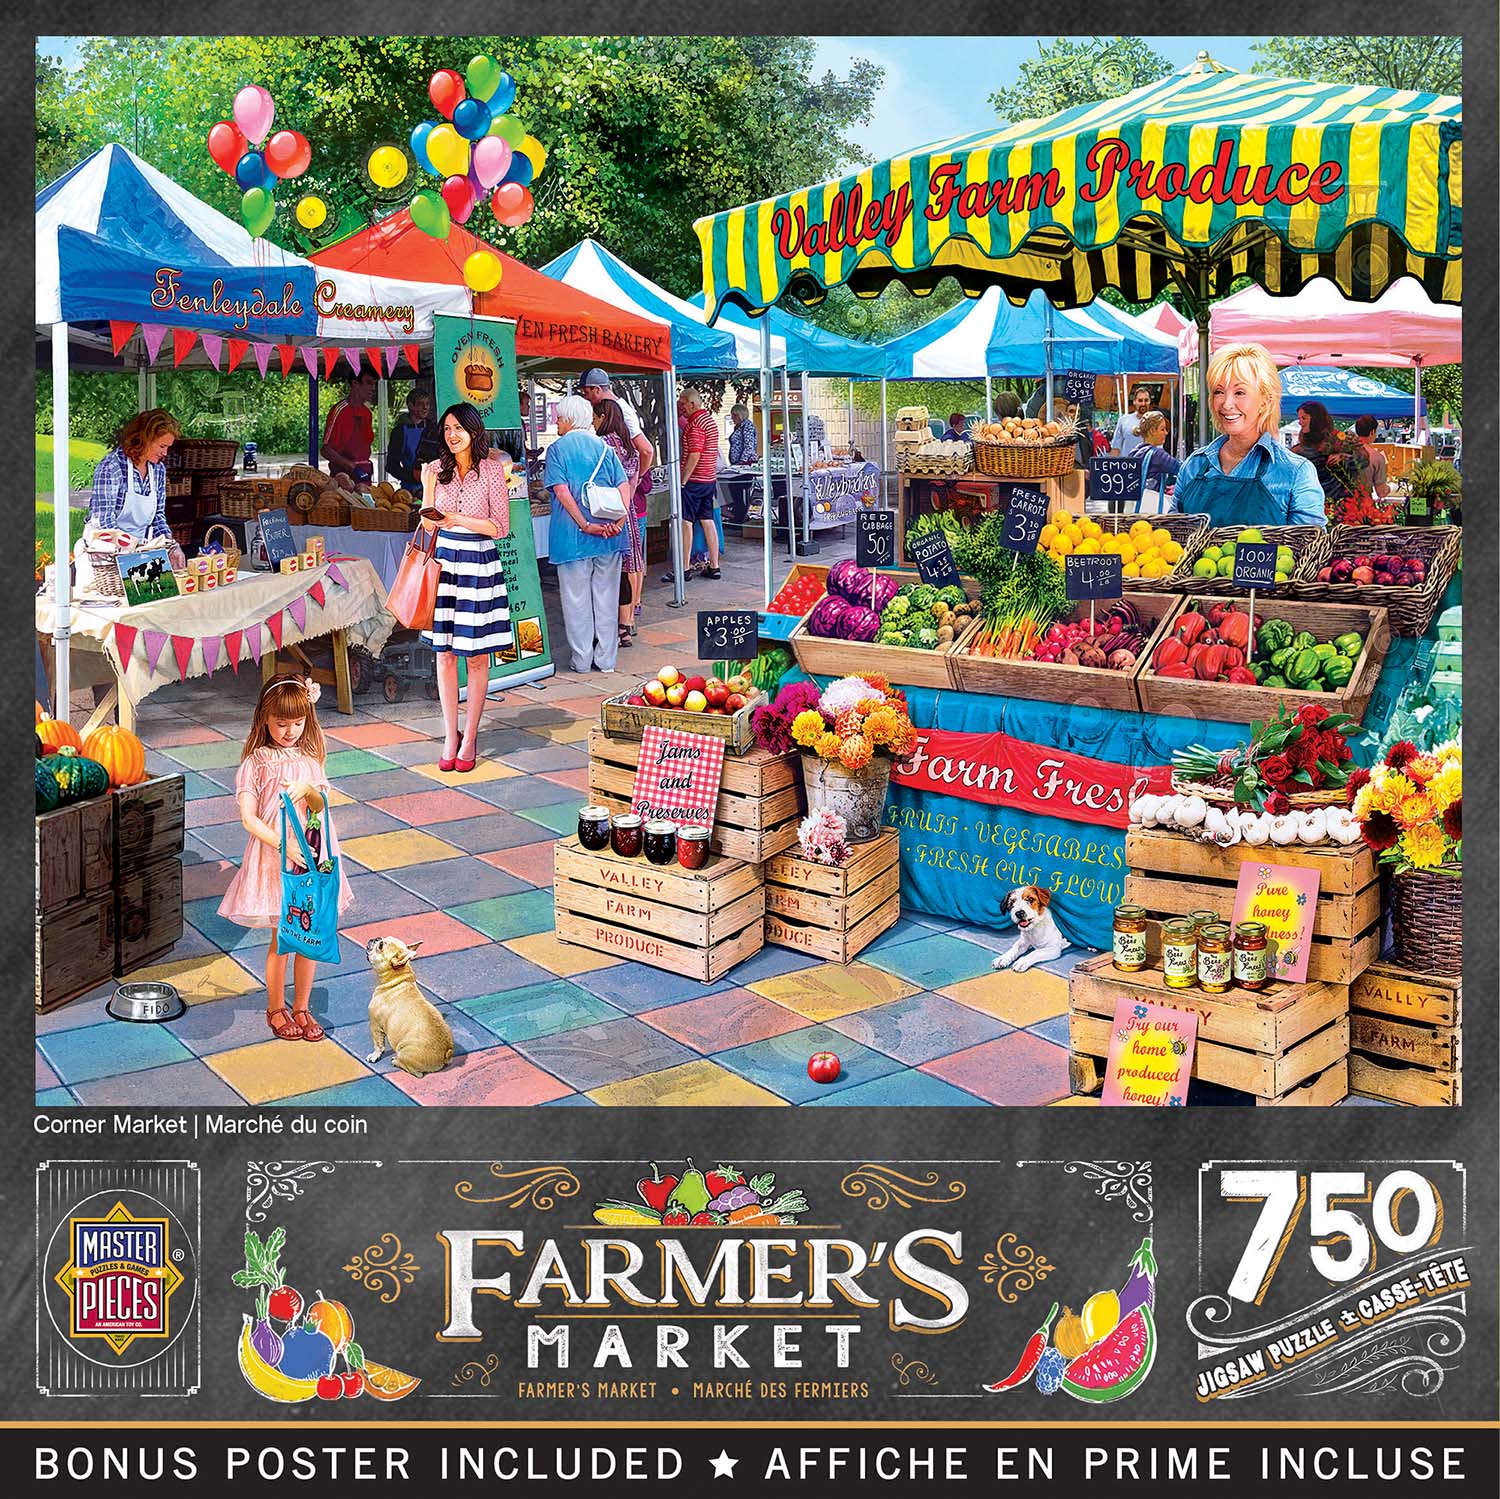 Farmer's Market - Corner Market